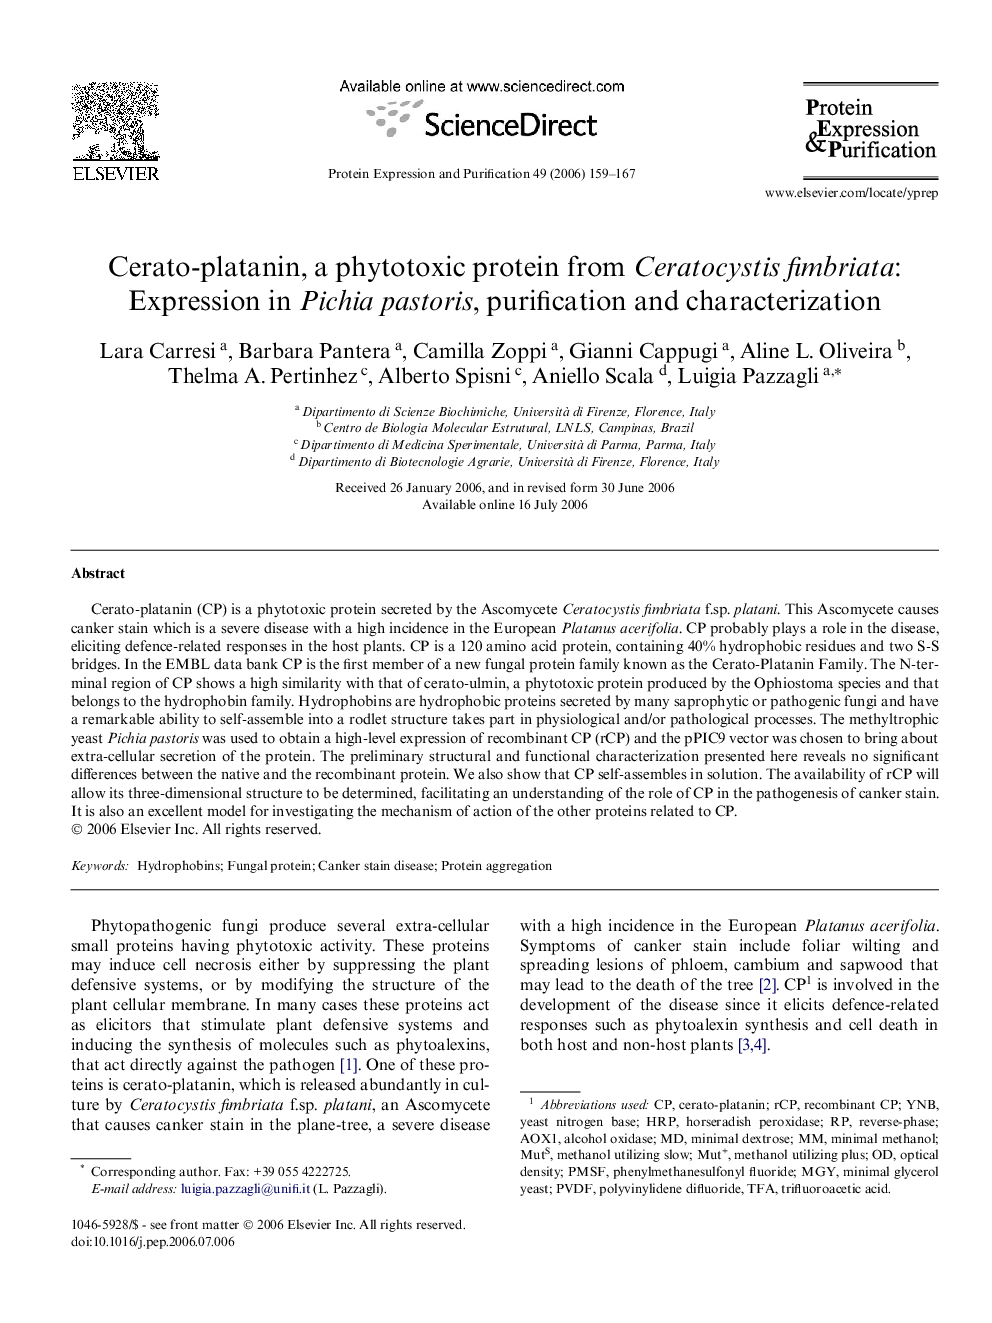 Cerato-platanin, a phytotoxic protein from Ceratocystis fimbriata: Expression in Pichia pastoris, purification and characterization